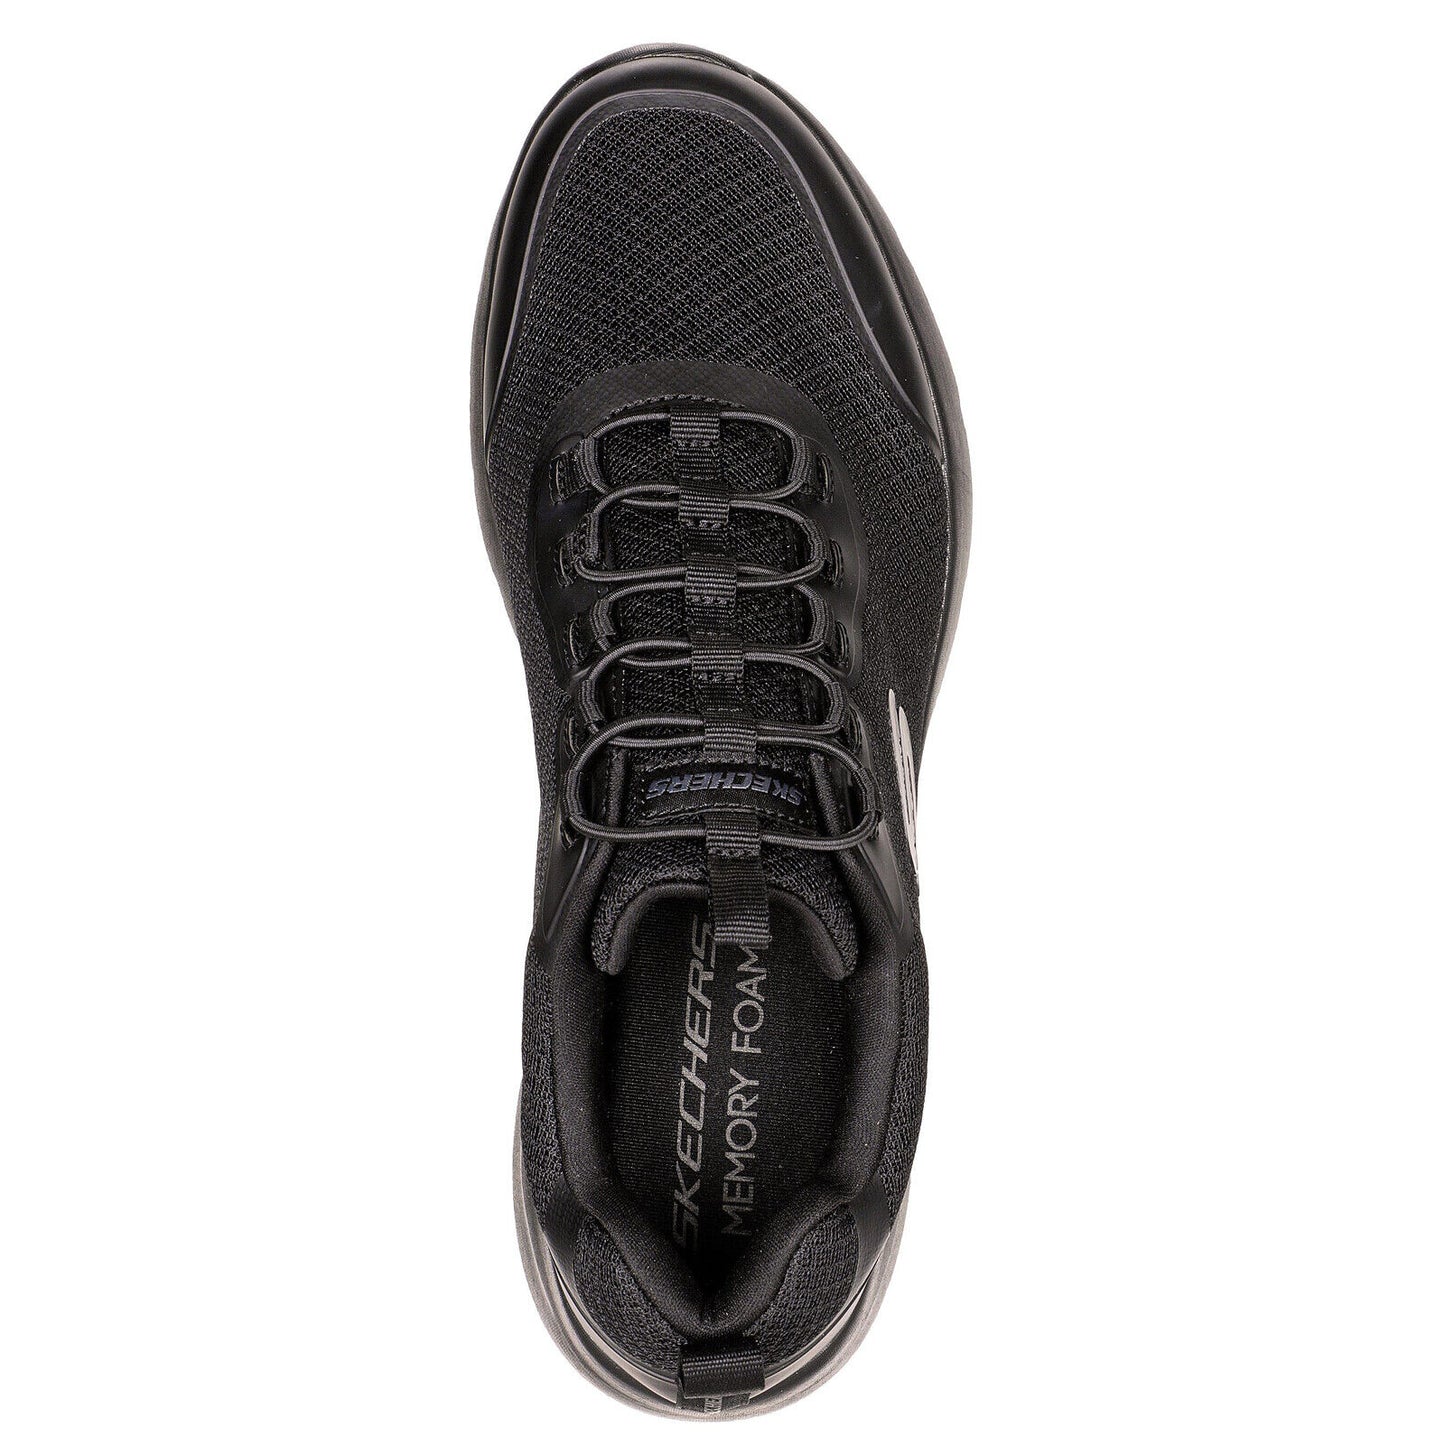 Skechers Mens Dynamite 2.0 Setner Black Slip On Lightweight Vegan Trainers Shoes